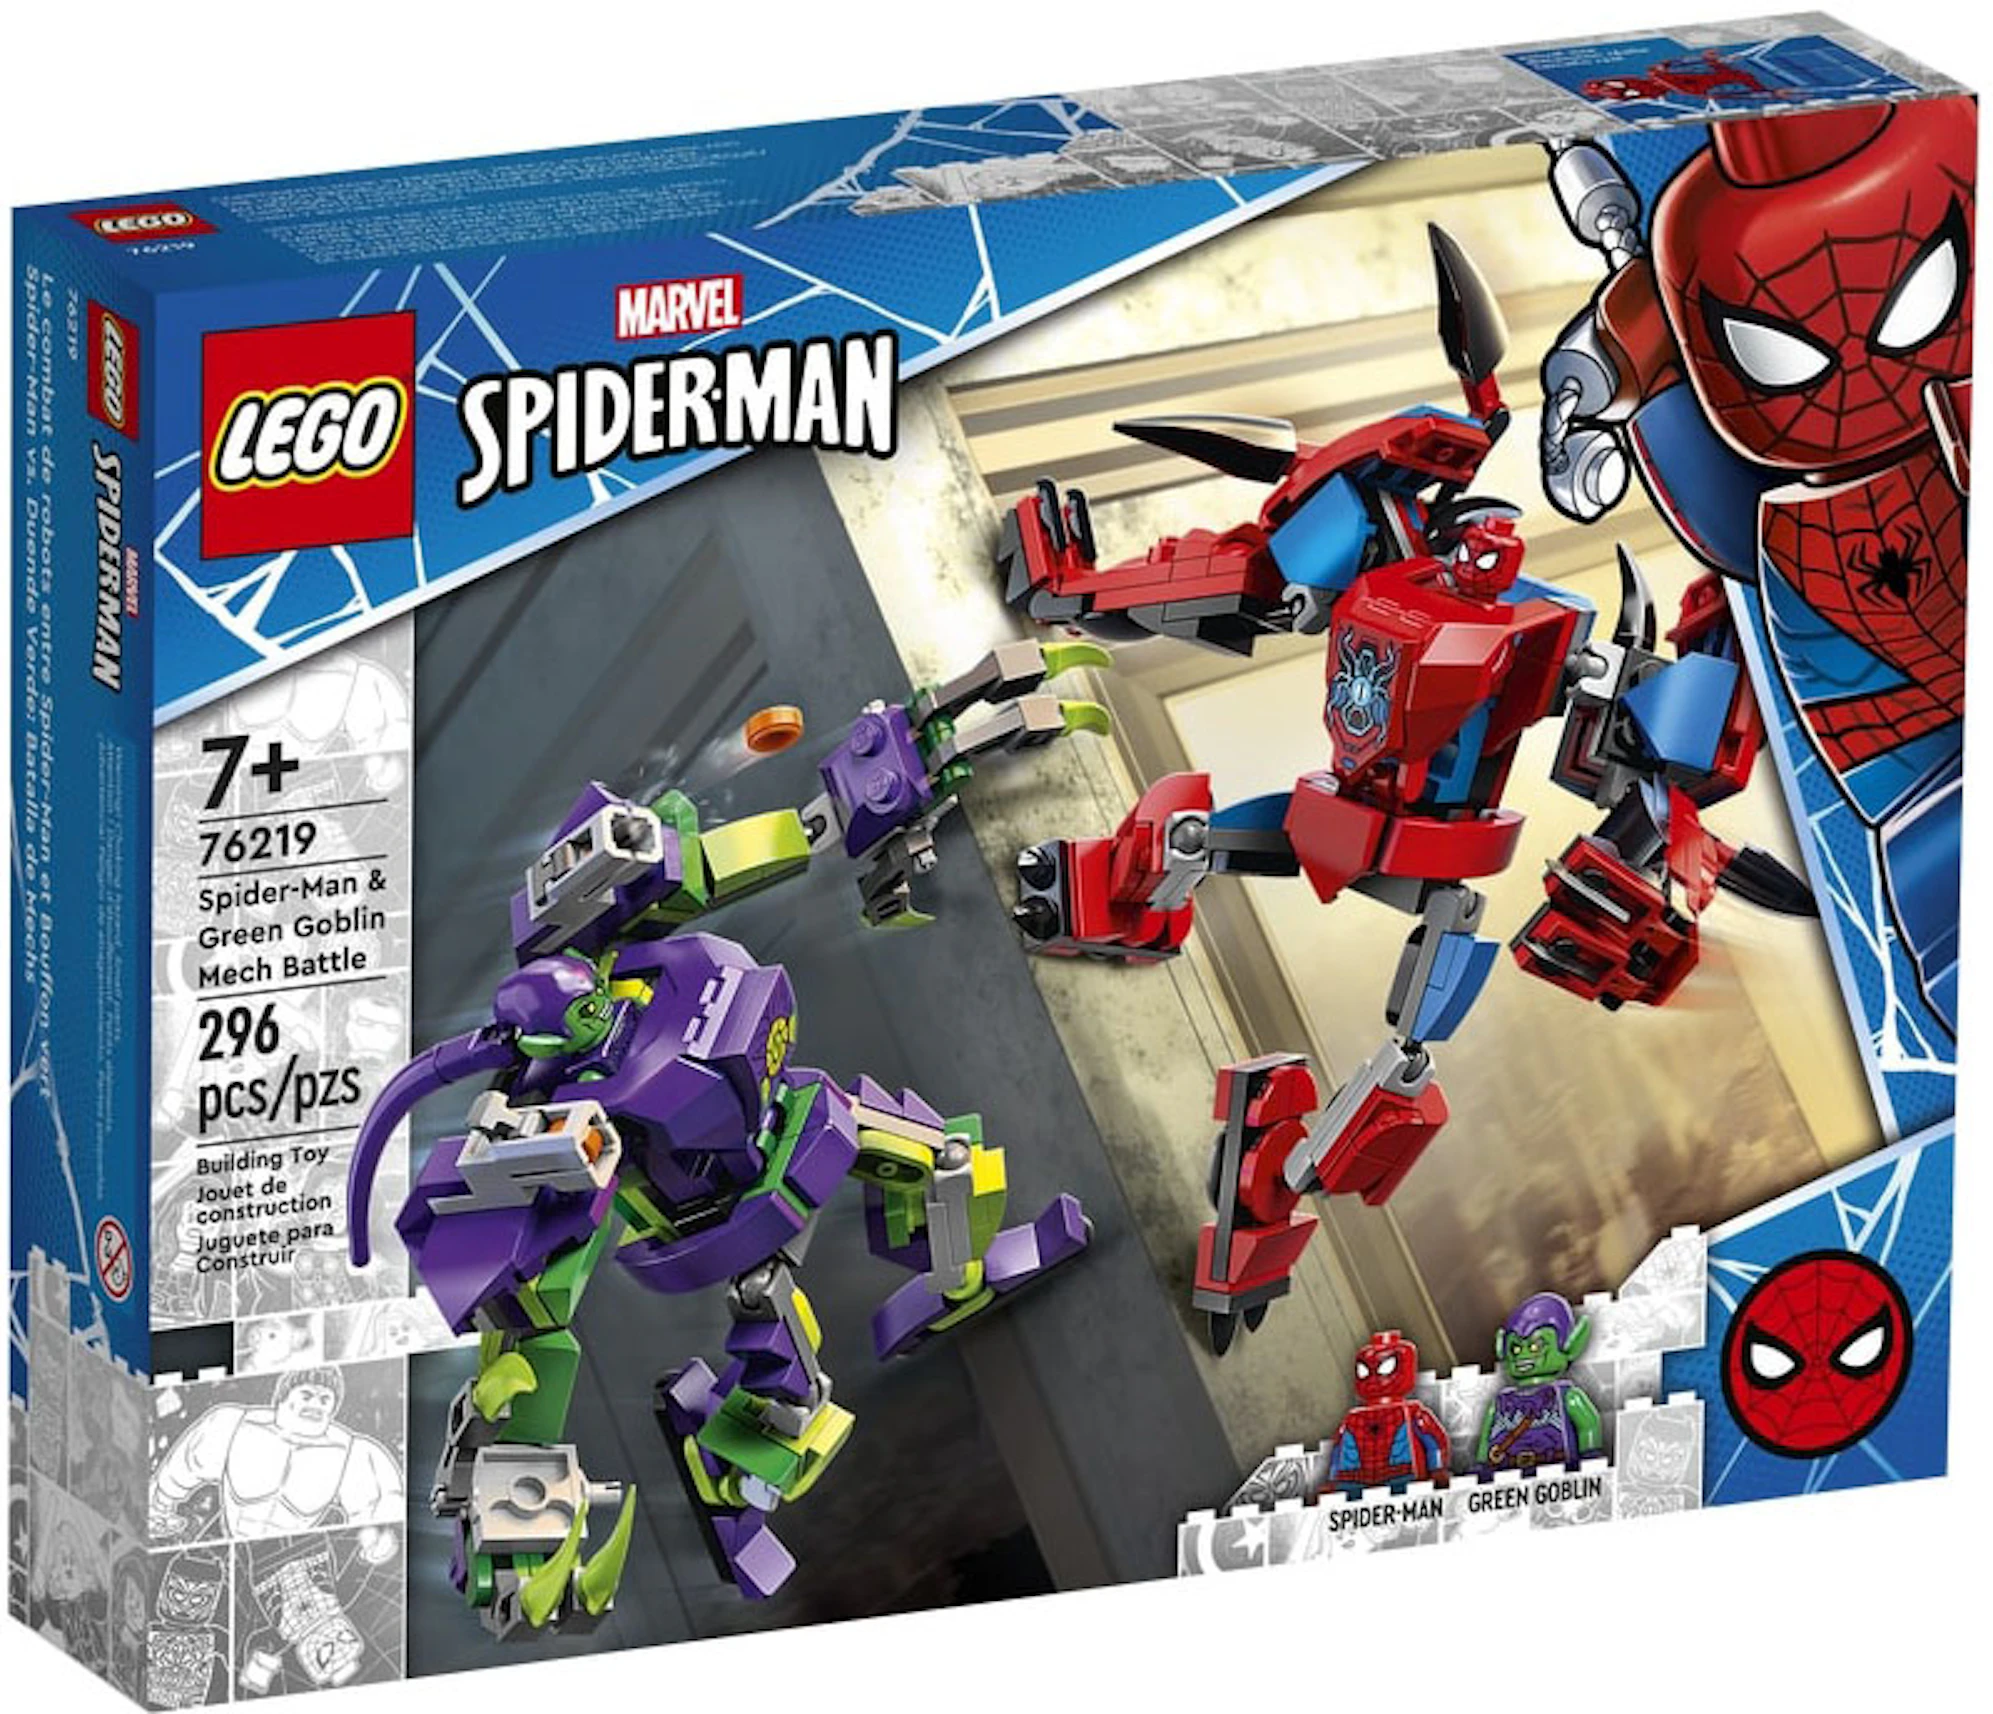 Maduro golf Flor de la ciudad LEGO Marvel Spider-Man - Spider-Man & Green Goblin Mech Battle Set 76219 -  ES